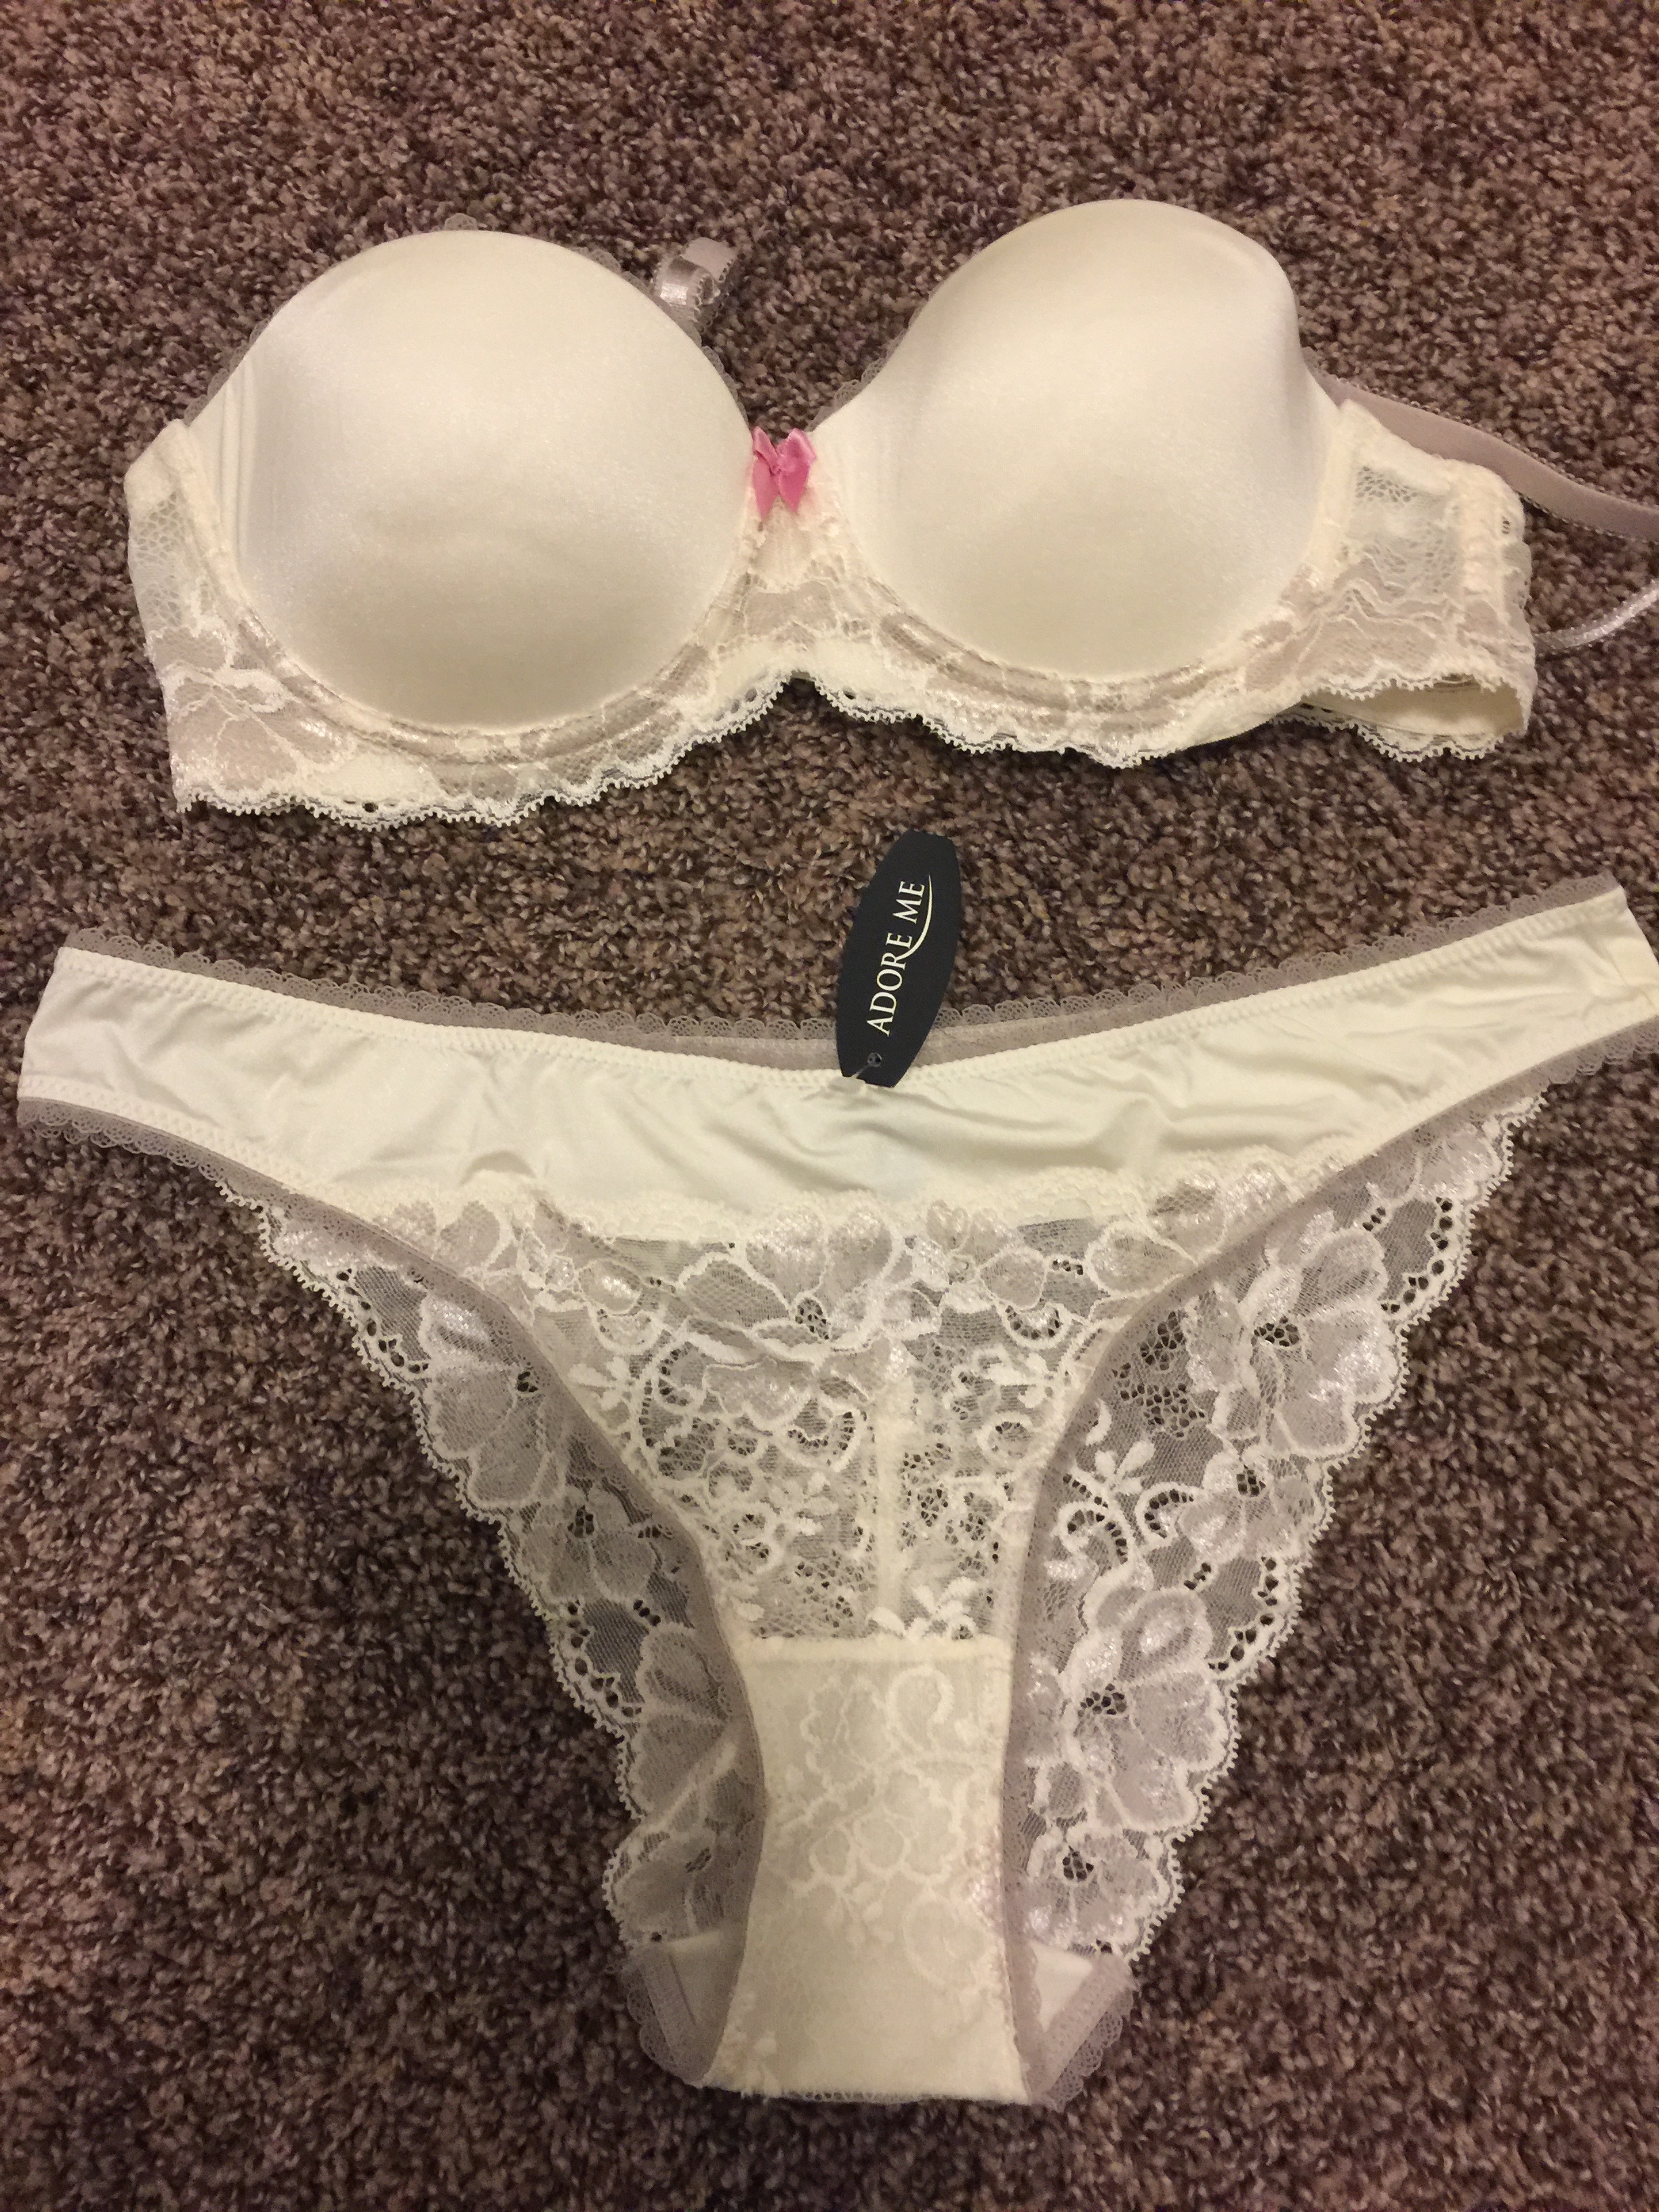 https://mystylespot.net/wp-content/uploads/2015/11/adore-me-bra-and-panties.jpg